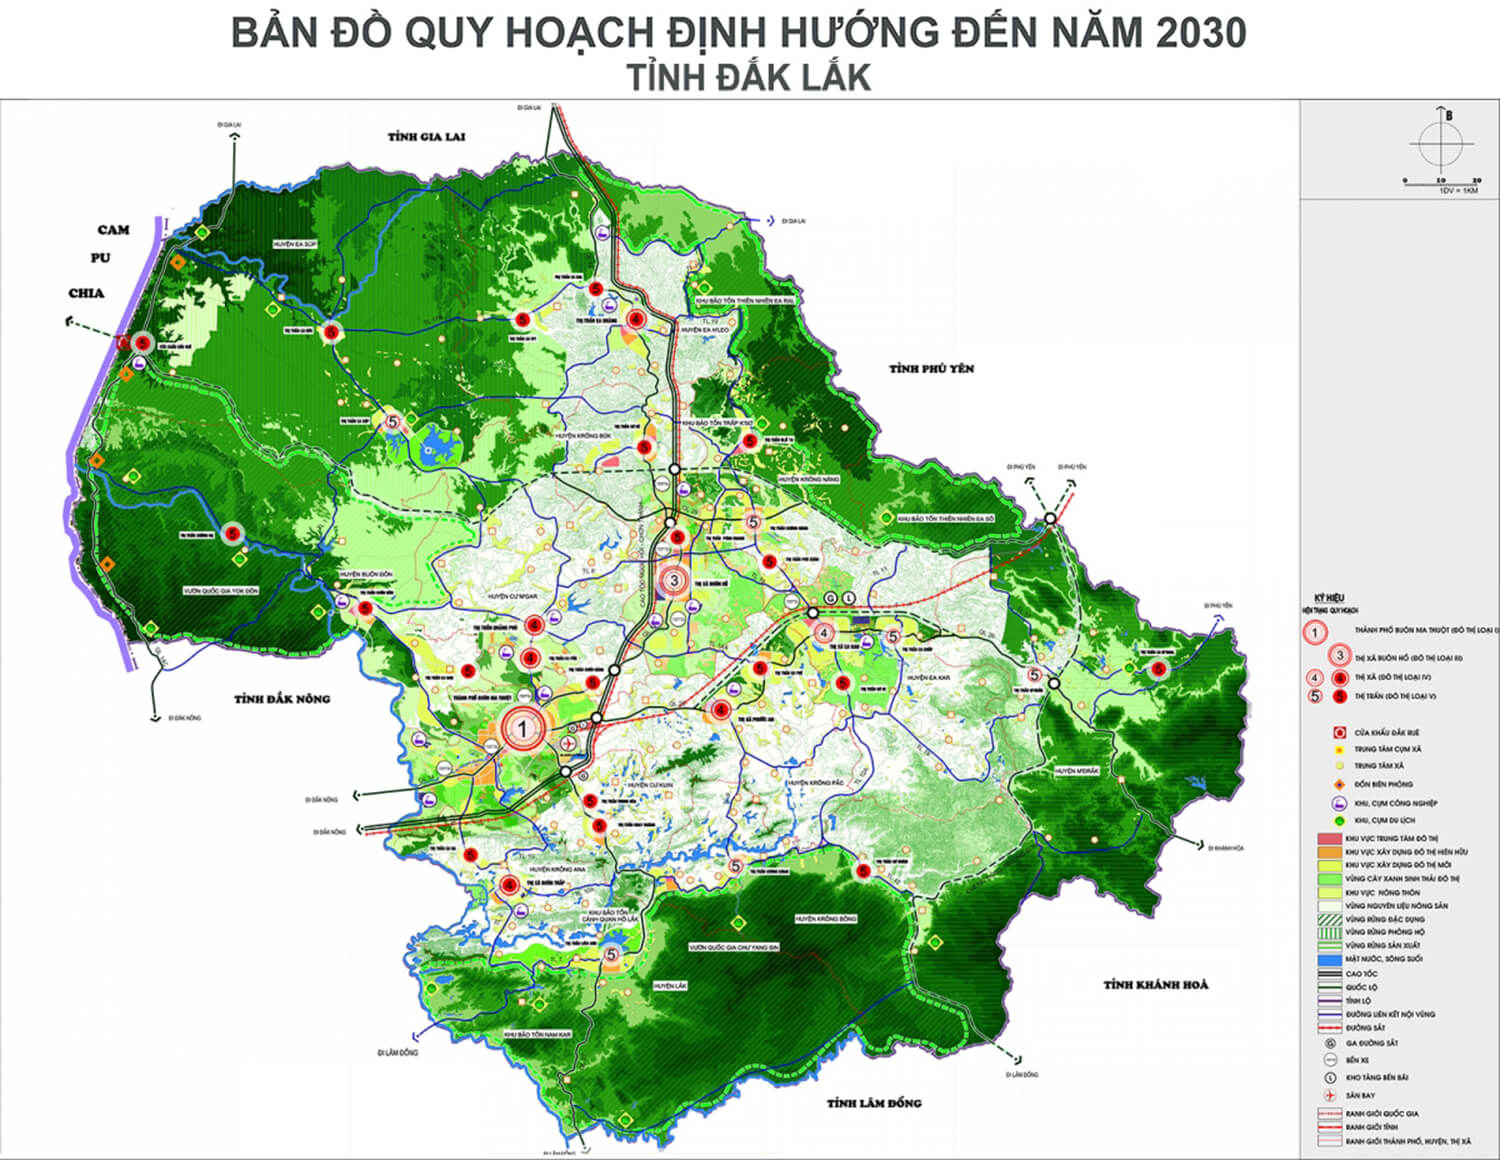 ban-do-quy-hoach-huyen-krong-bong-tinh-dak-lak-den-nam-2030